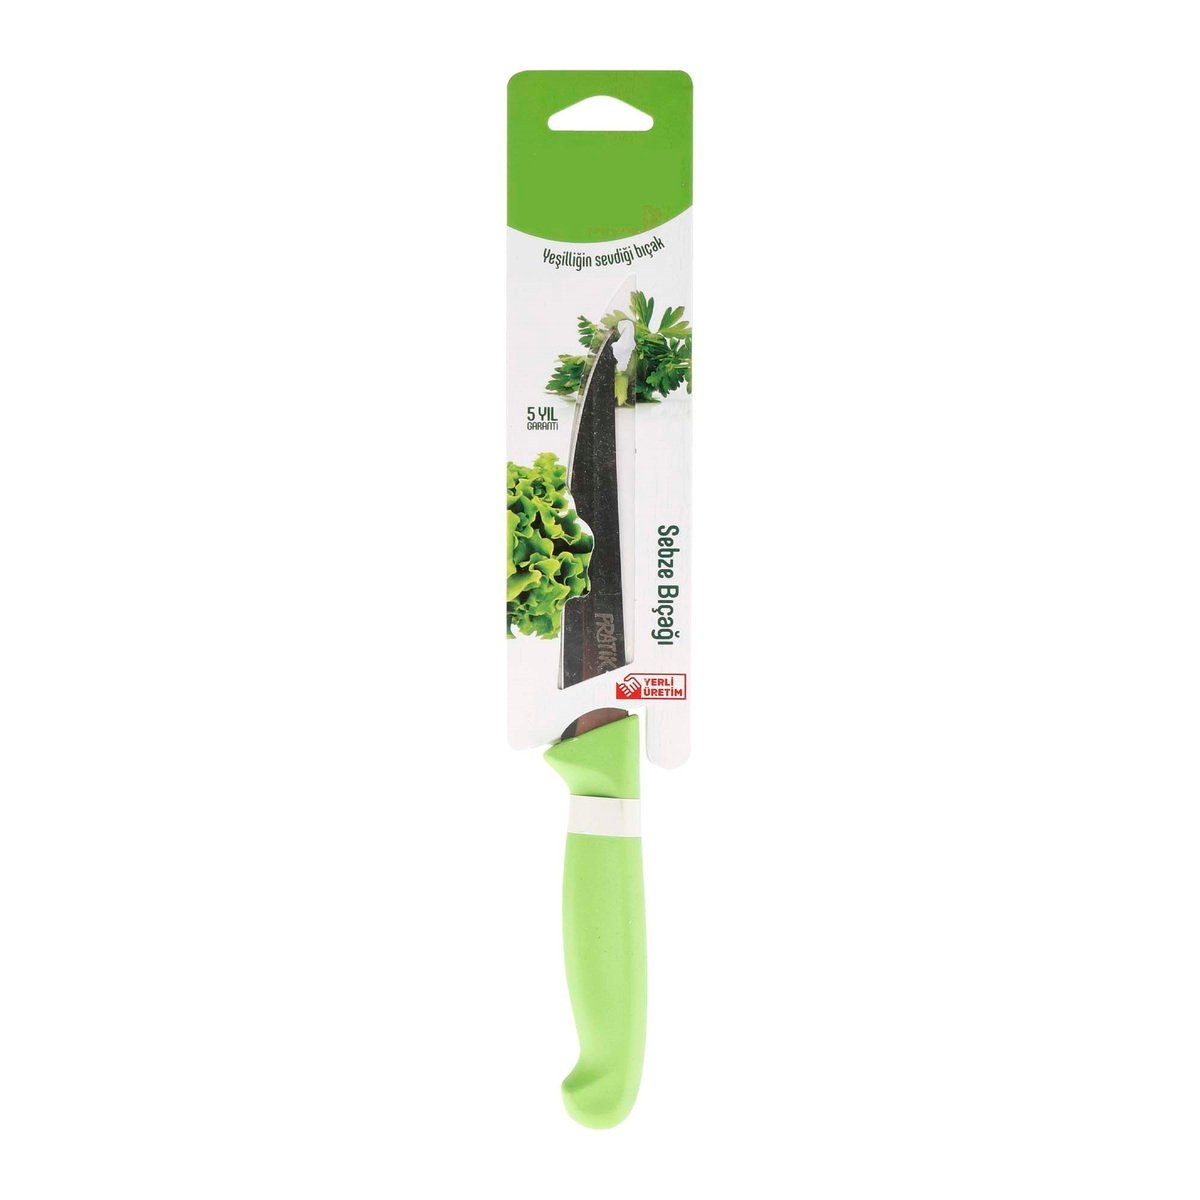 Pirge Vegetable Knife, Green, 43013